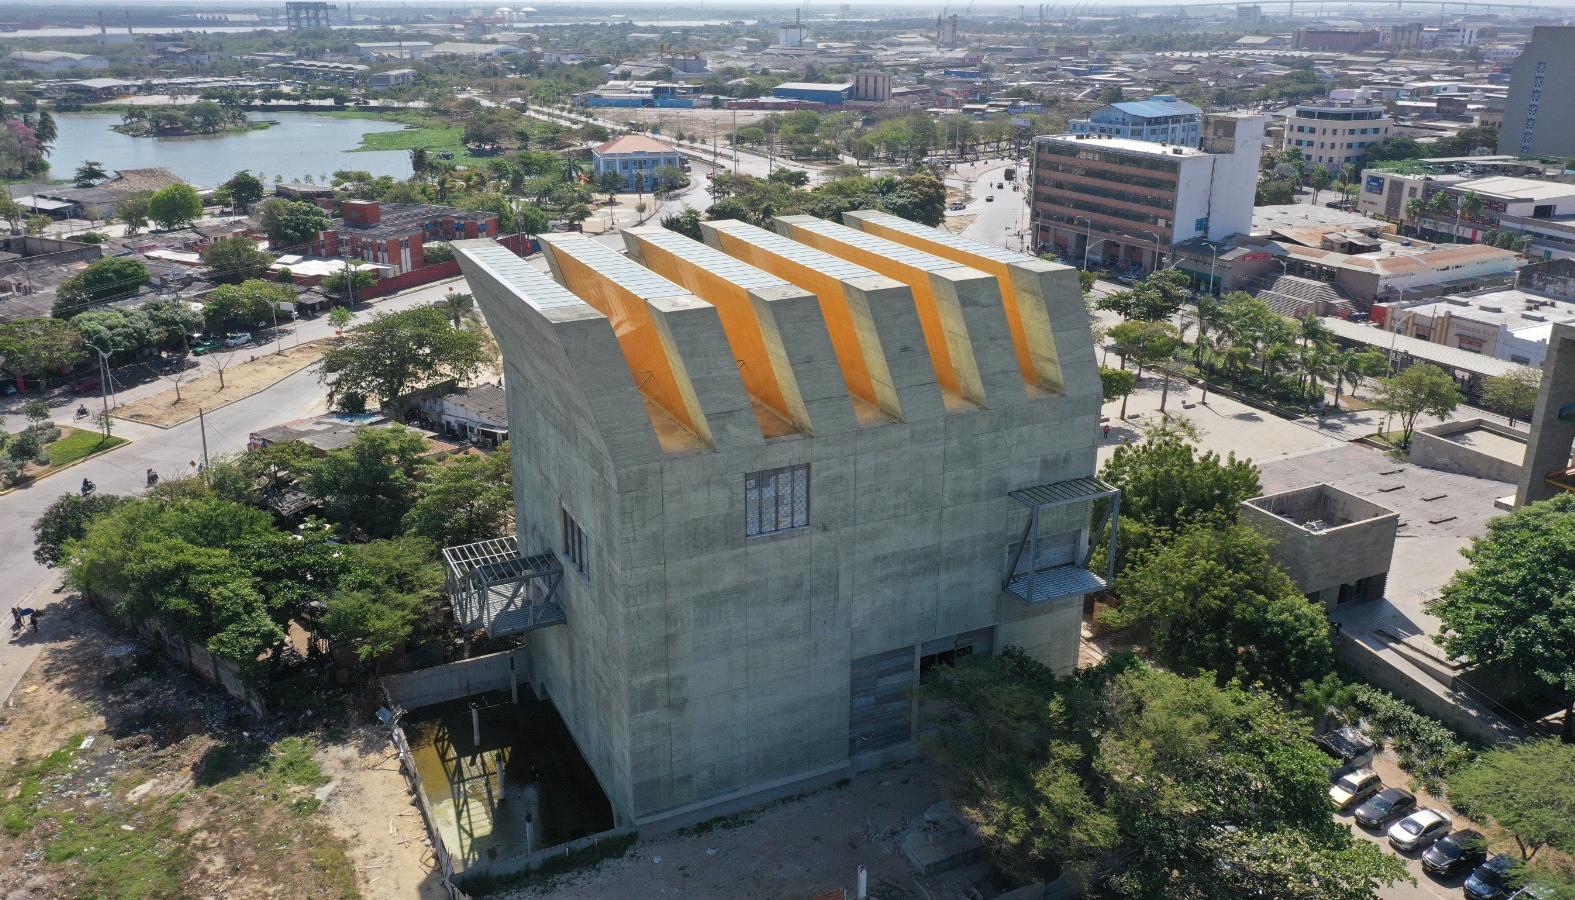 Museo de Arte Moderno de Barranquilla.